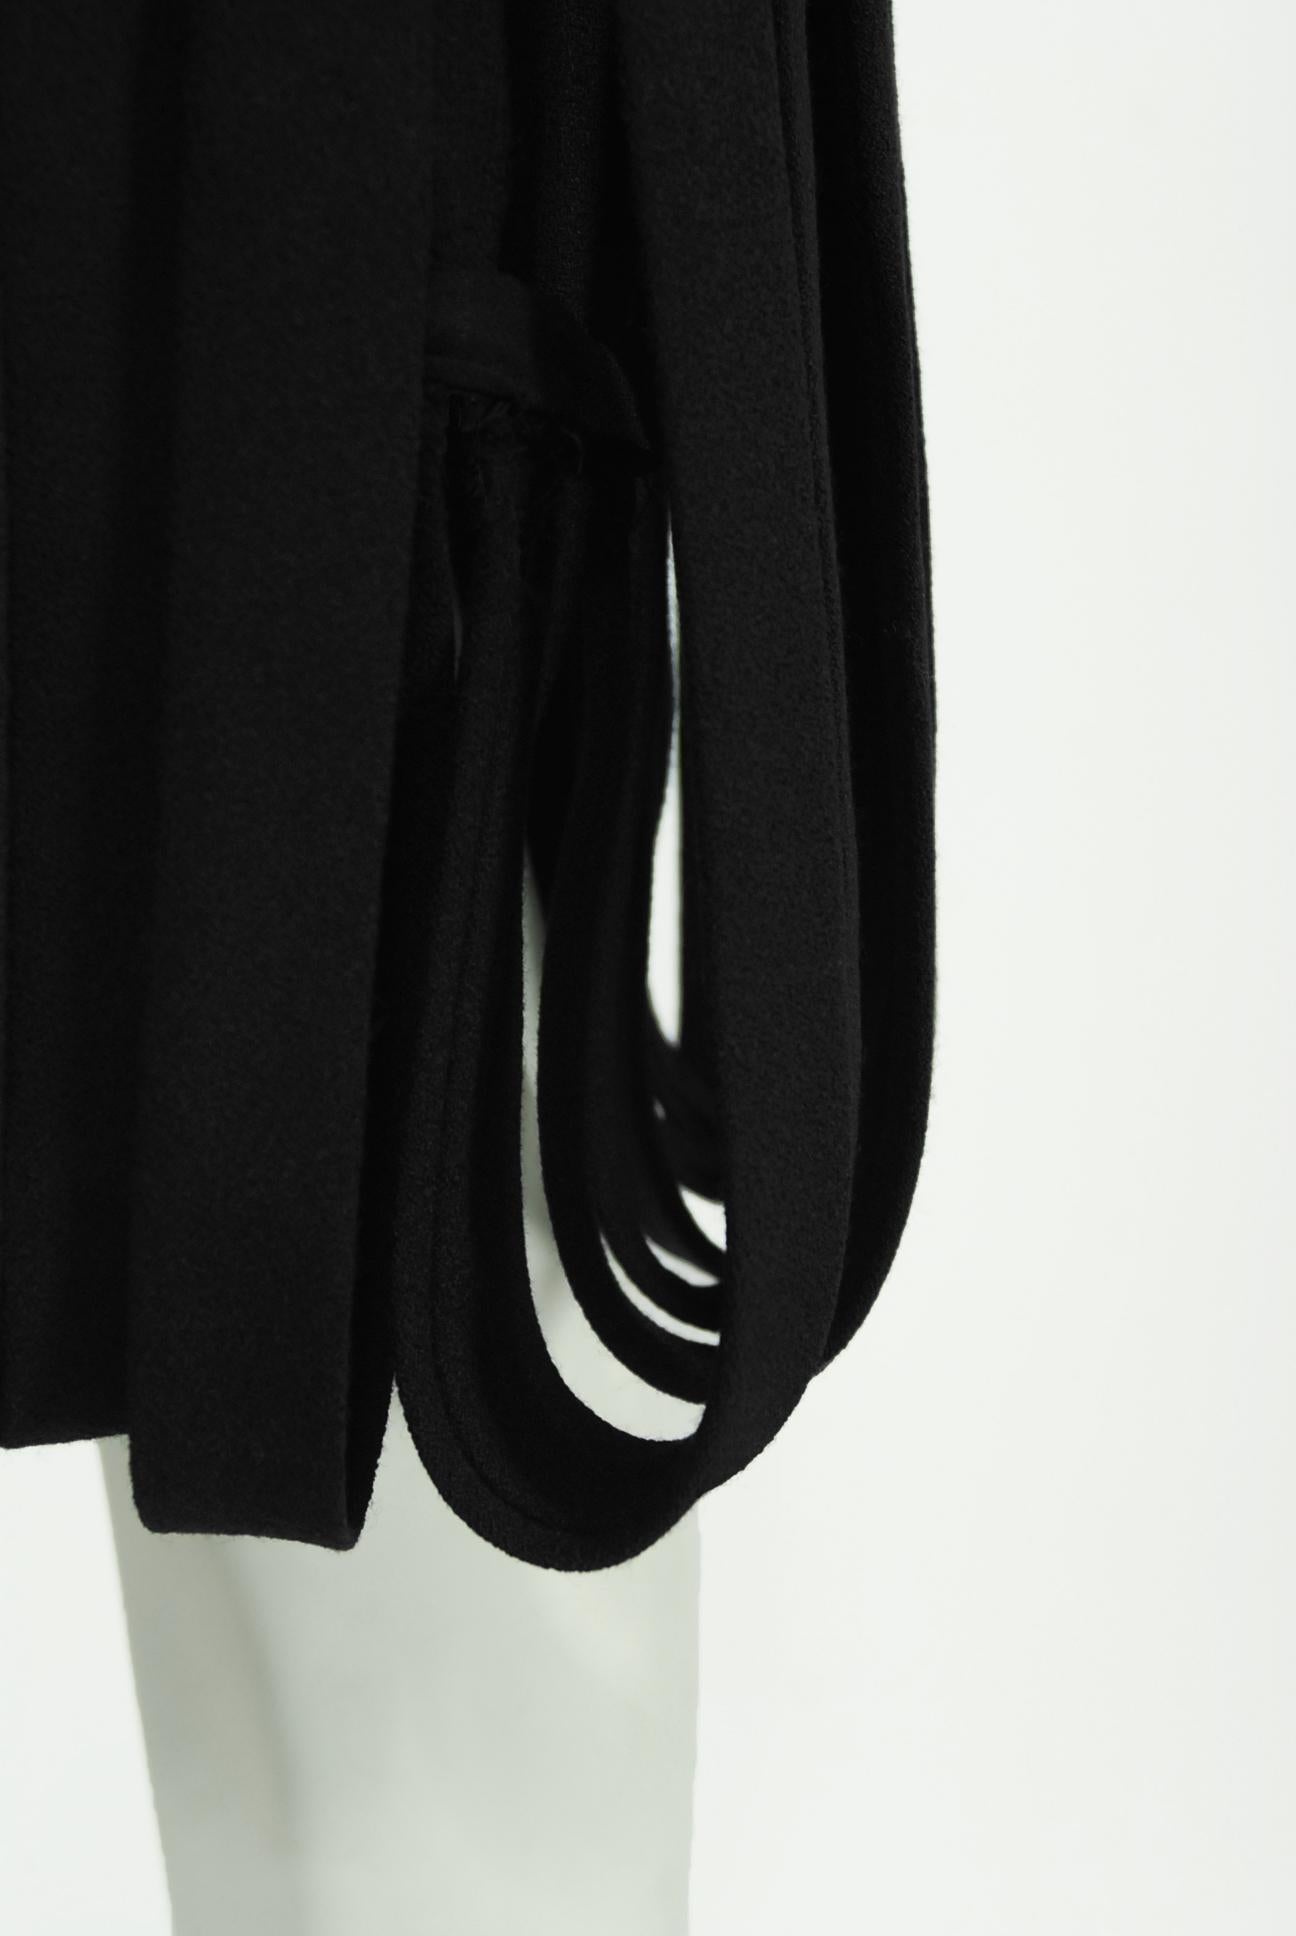 Vintage 1967 Pierre Cardin Documented Black Wool Space-Age Mod Carwash Dress 8